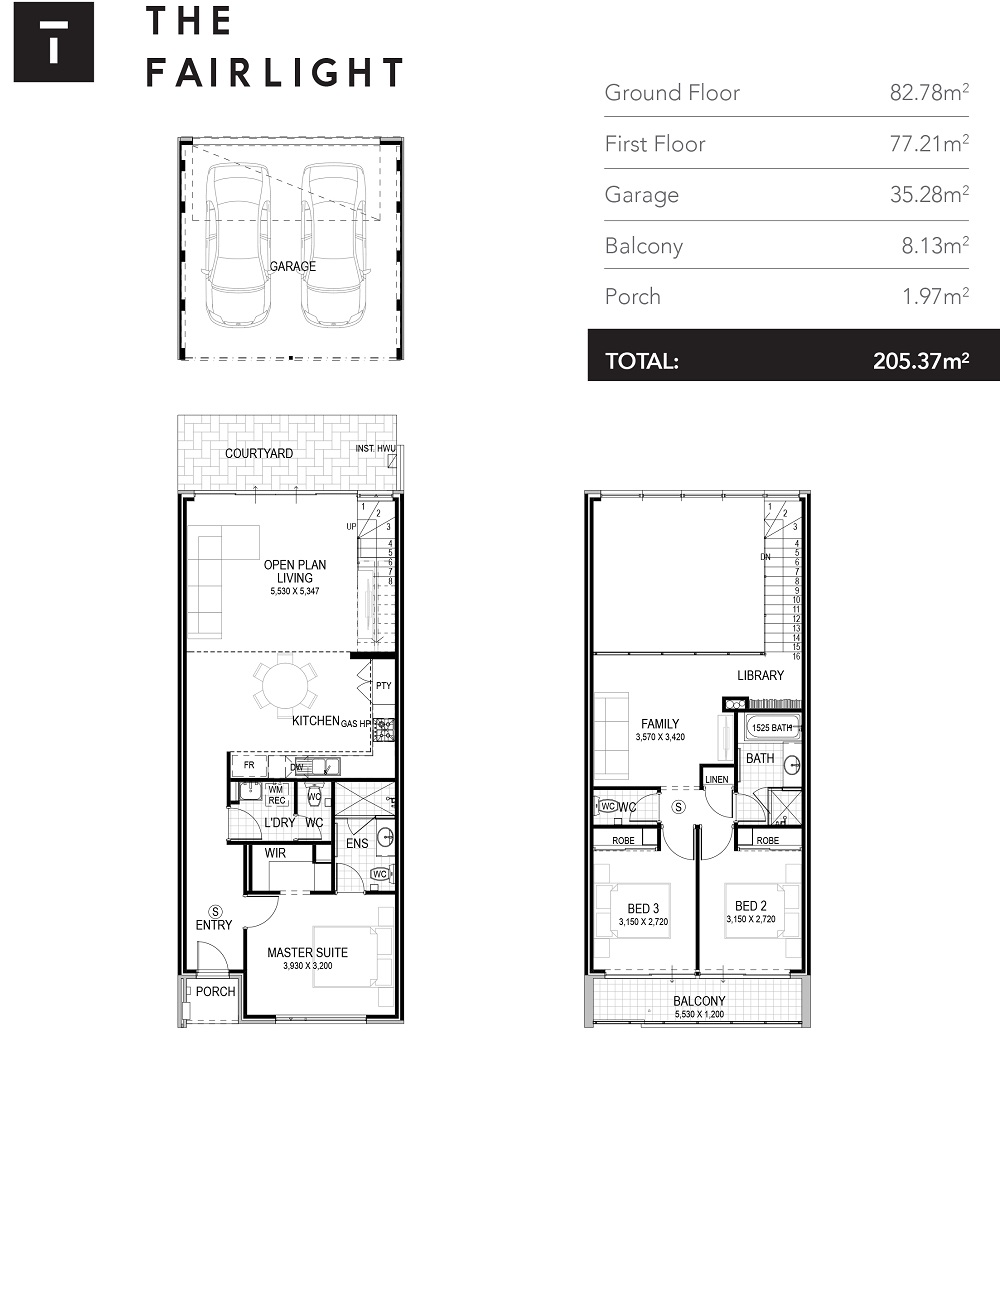 Lake Treeby Fairlight Terrace Houses floorplan 1000x666